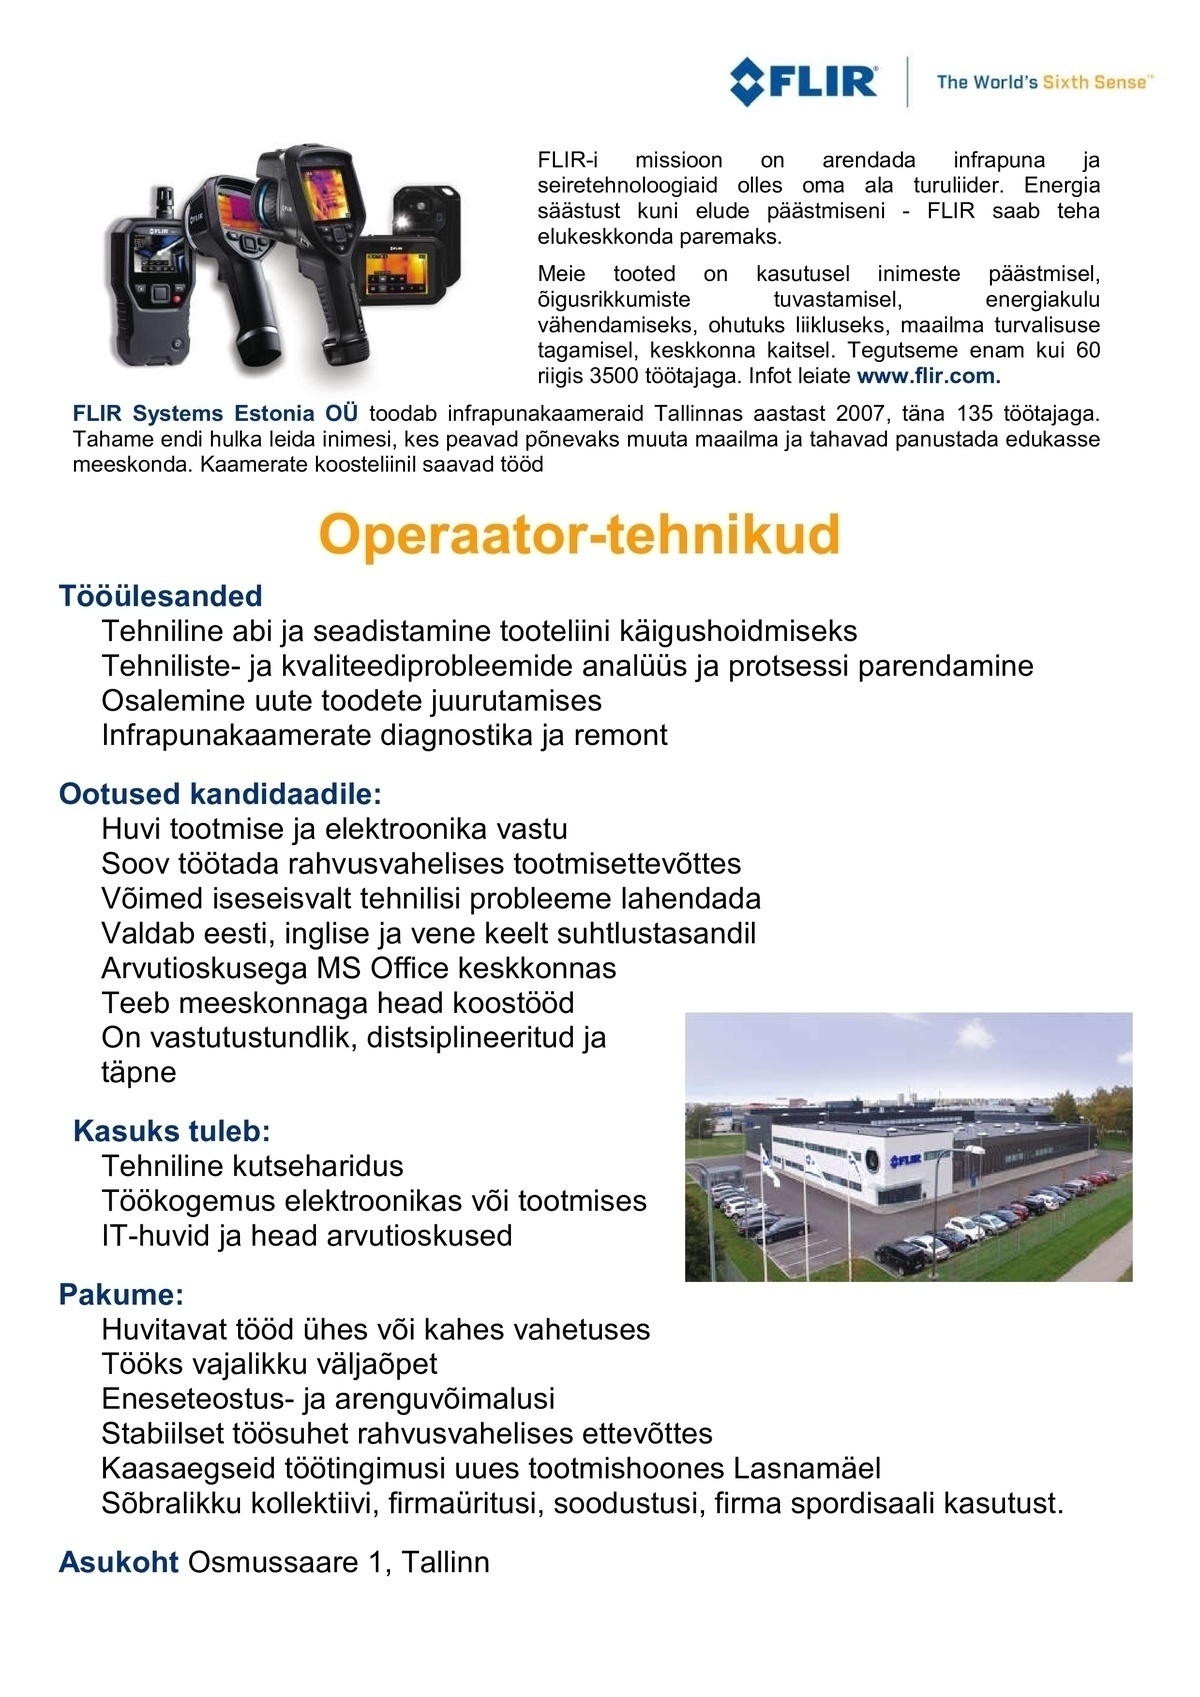 FLIR Systems Estonia OÜ Operaator-tehnik